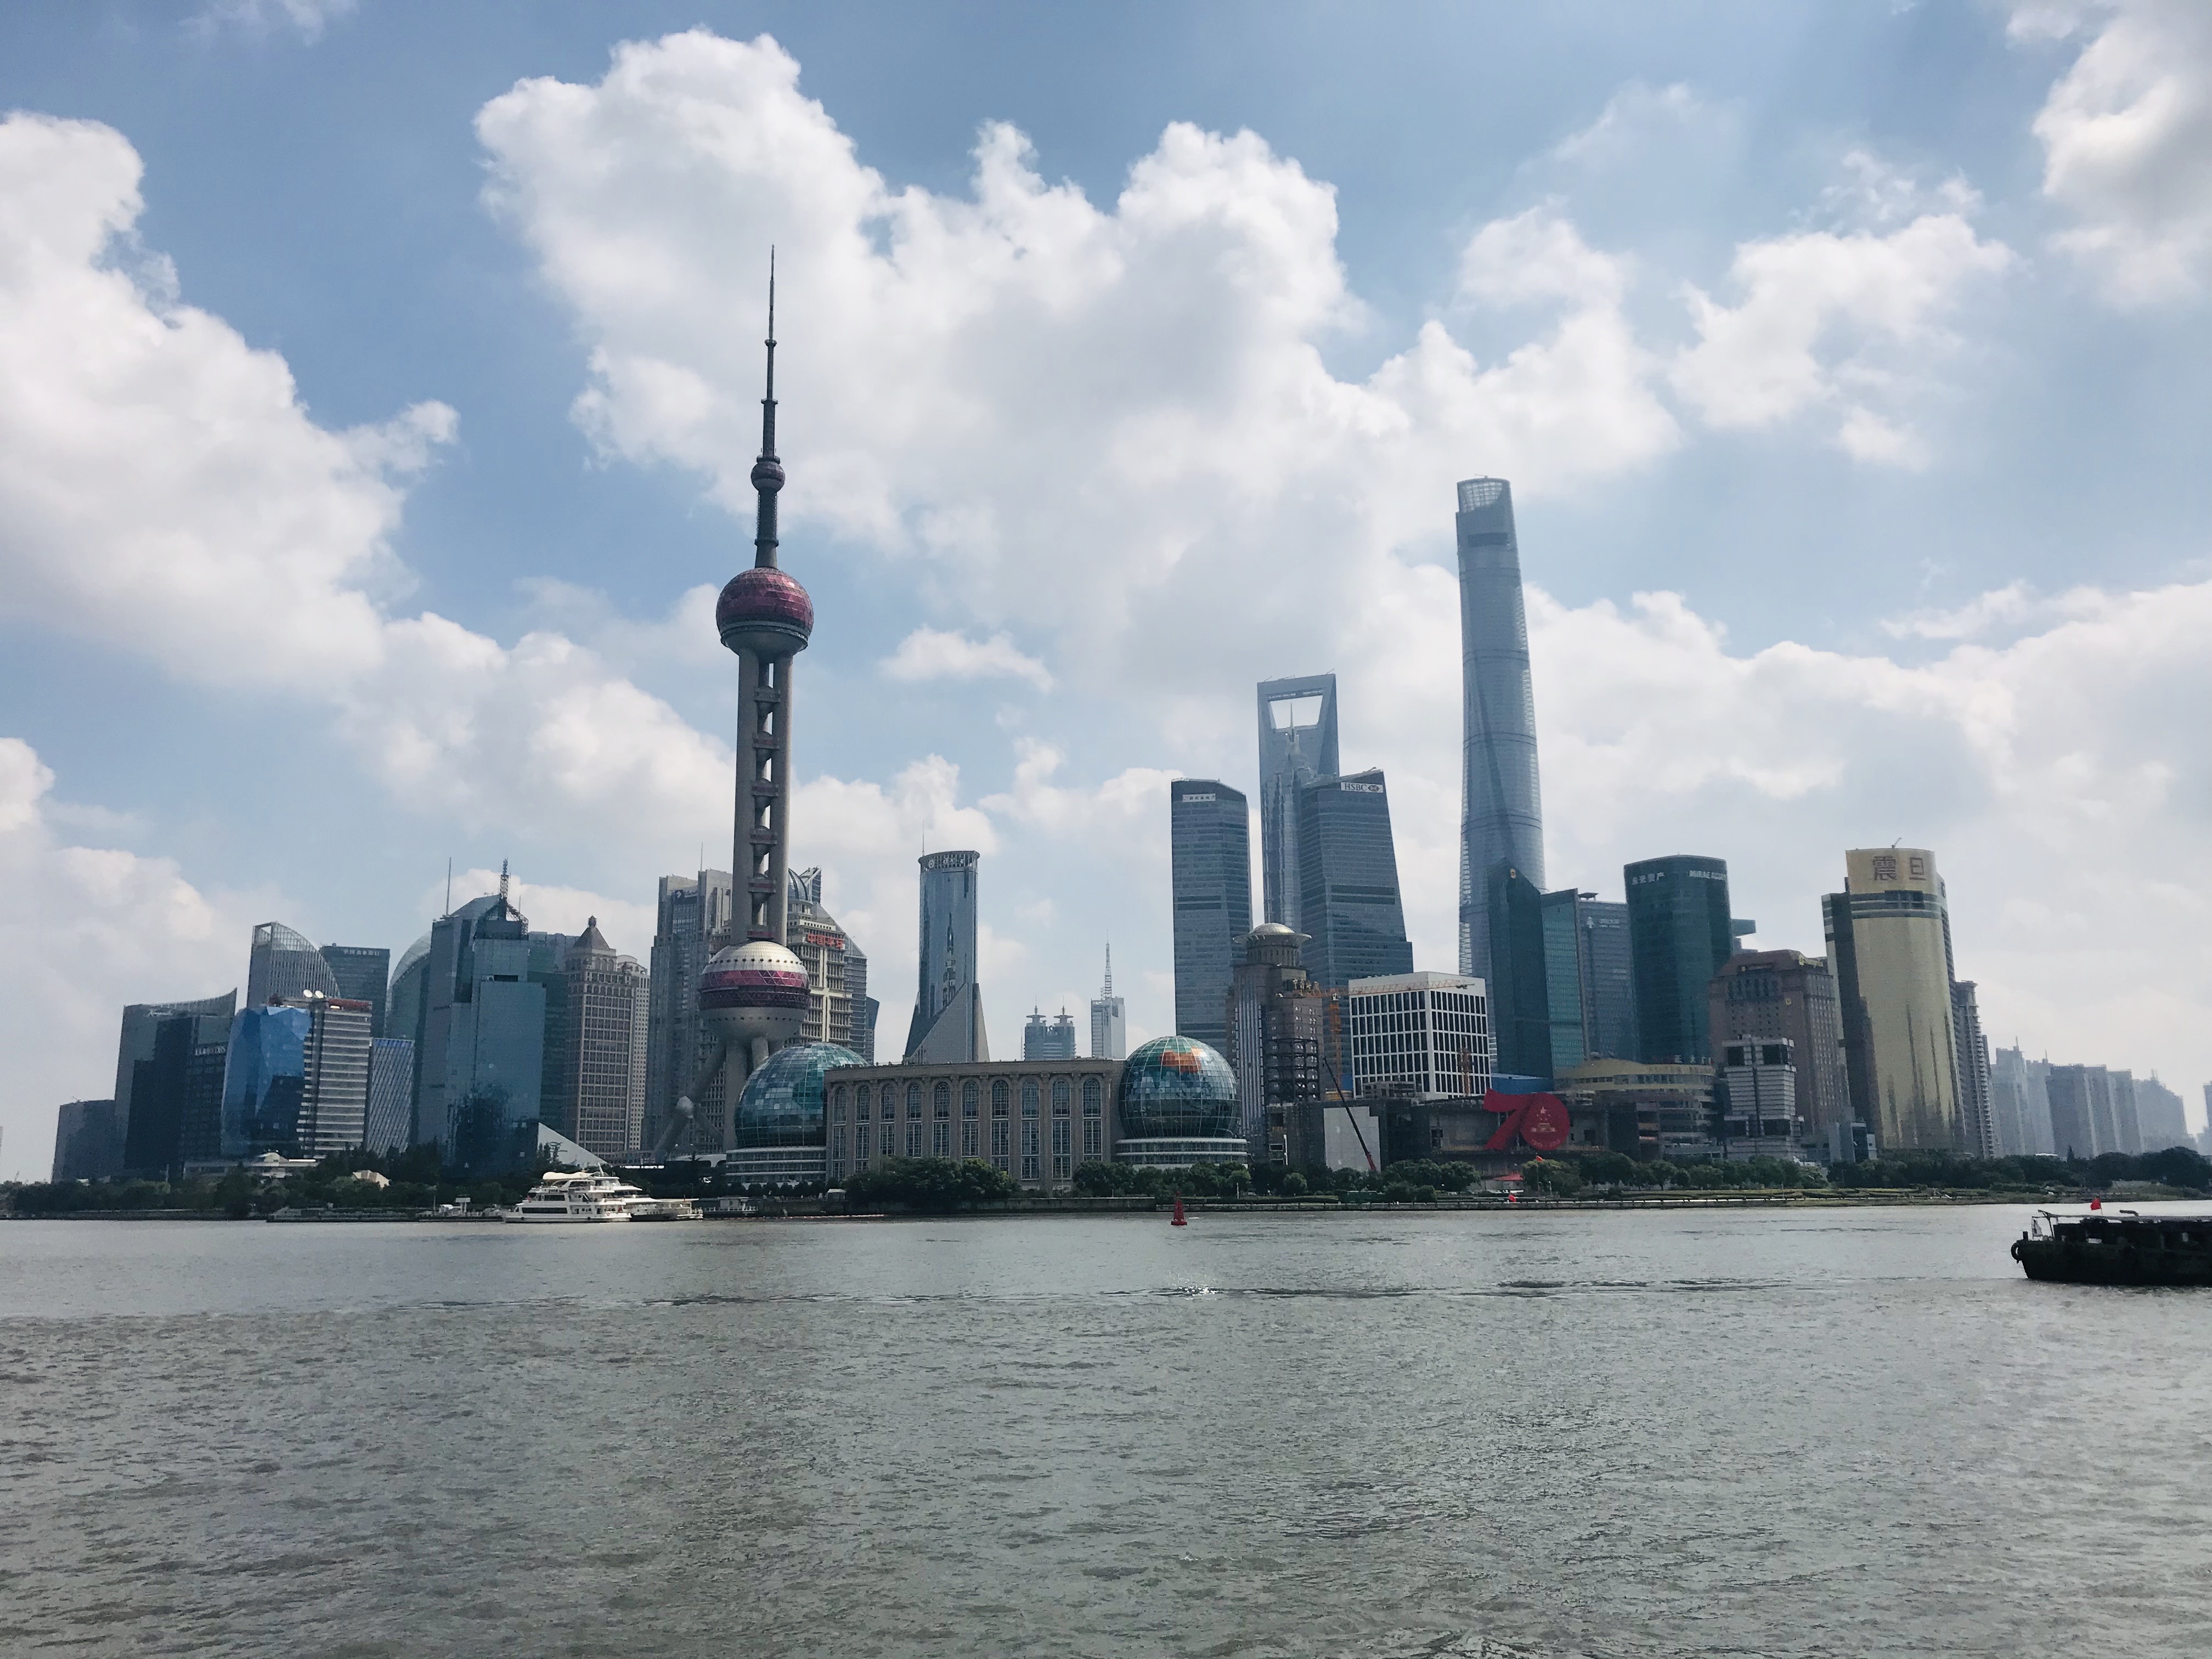 The skyline of Shanghai from "the Bund."